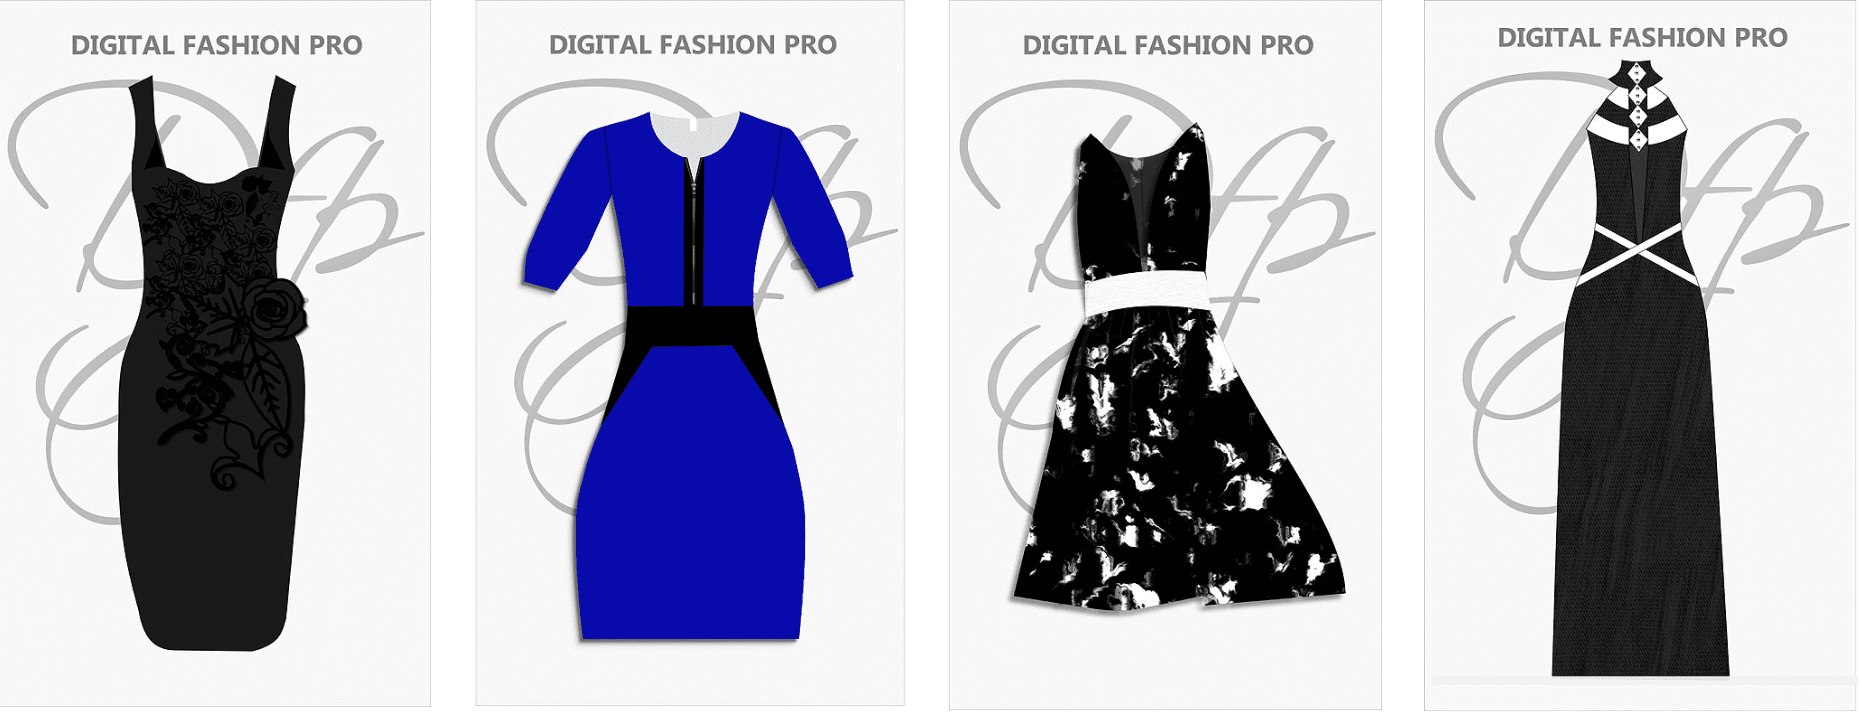 Best Fashion Design Software For Designing Cothing - Beginner Friendly